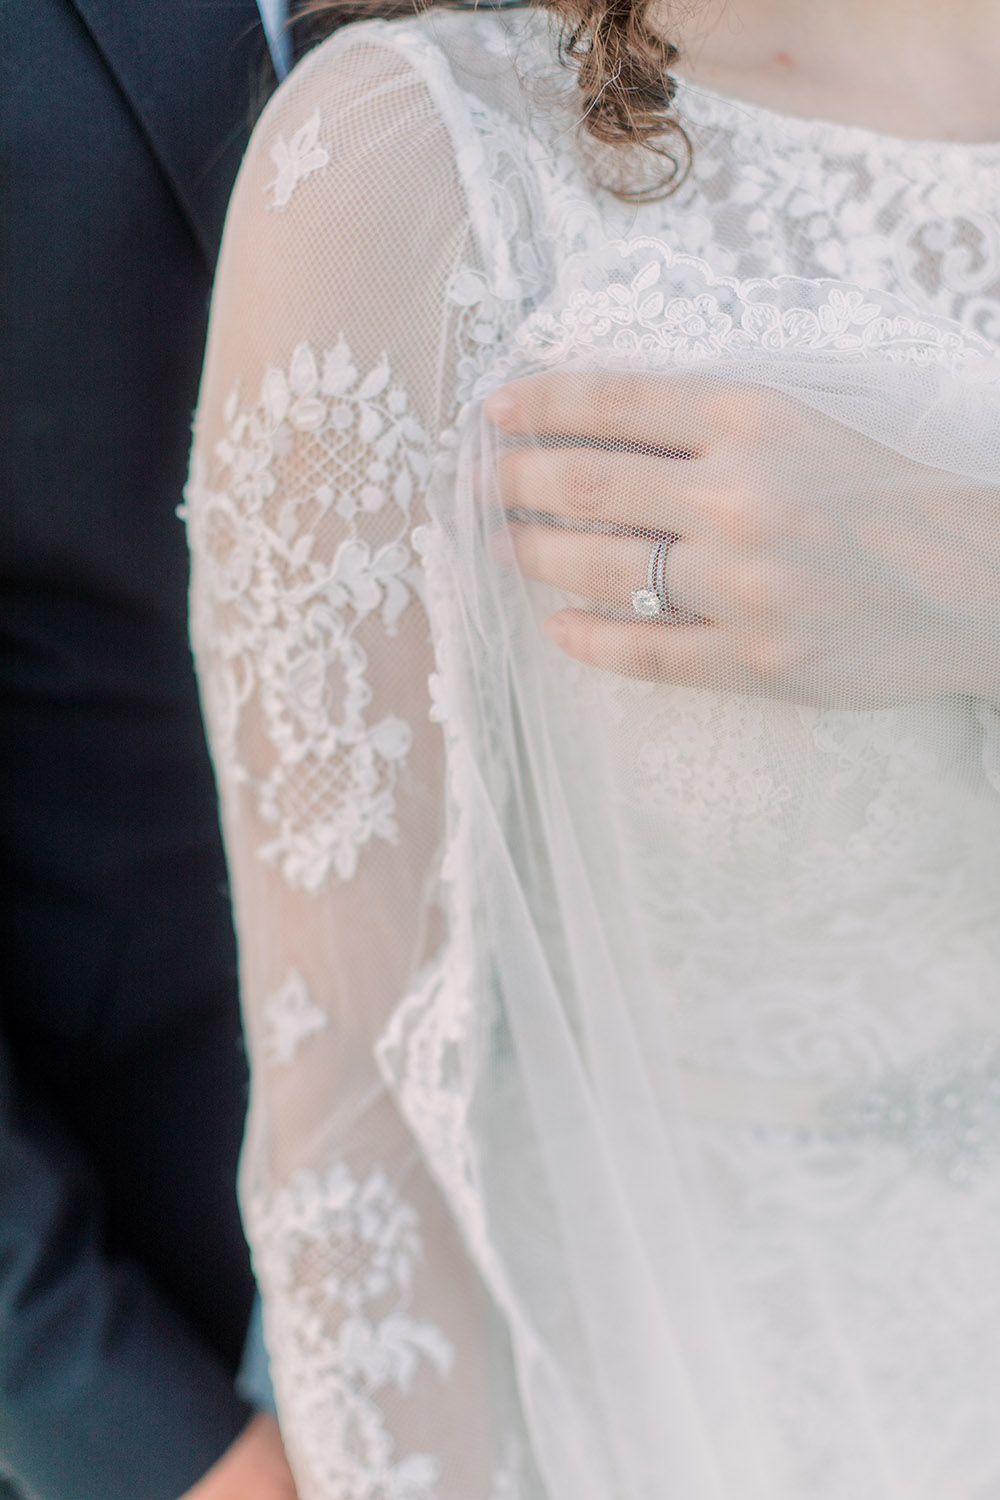 Wedding ring detail. Photo: Ashley Kristen Photography